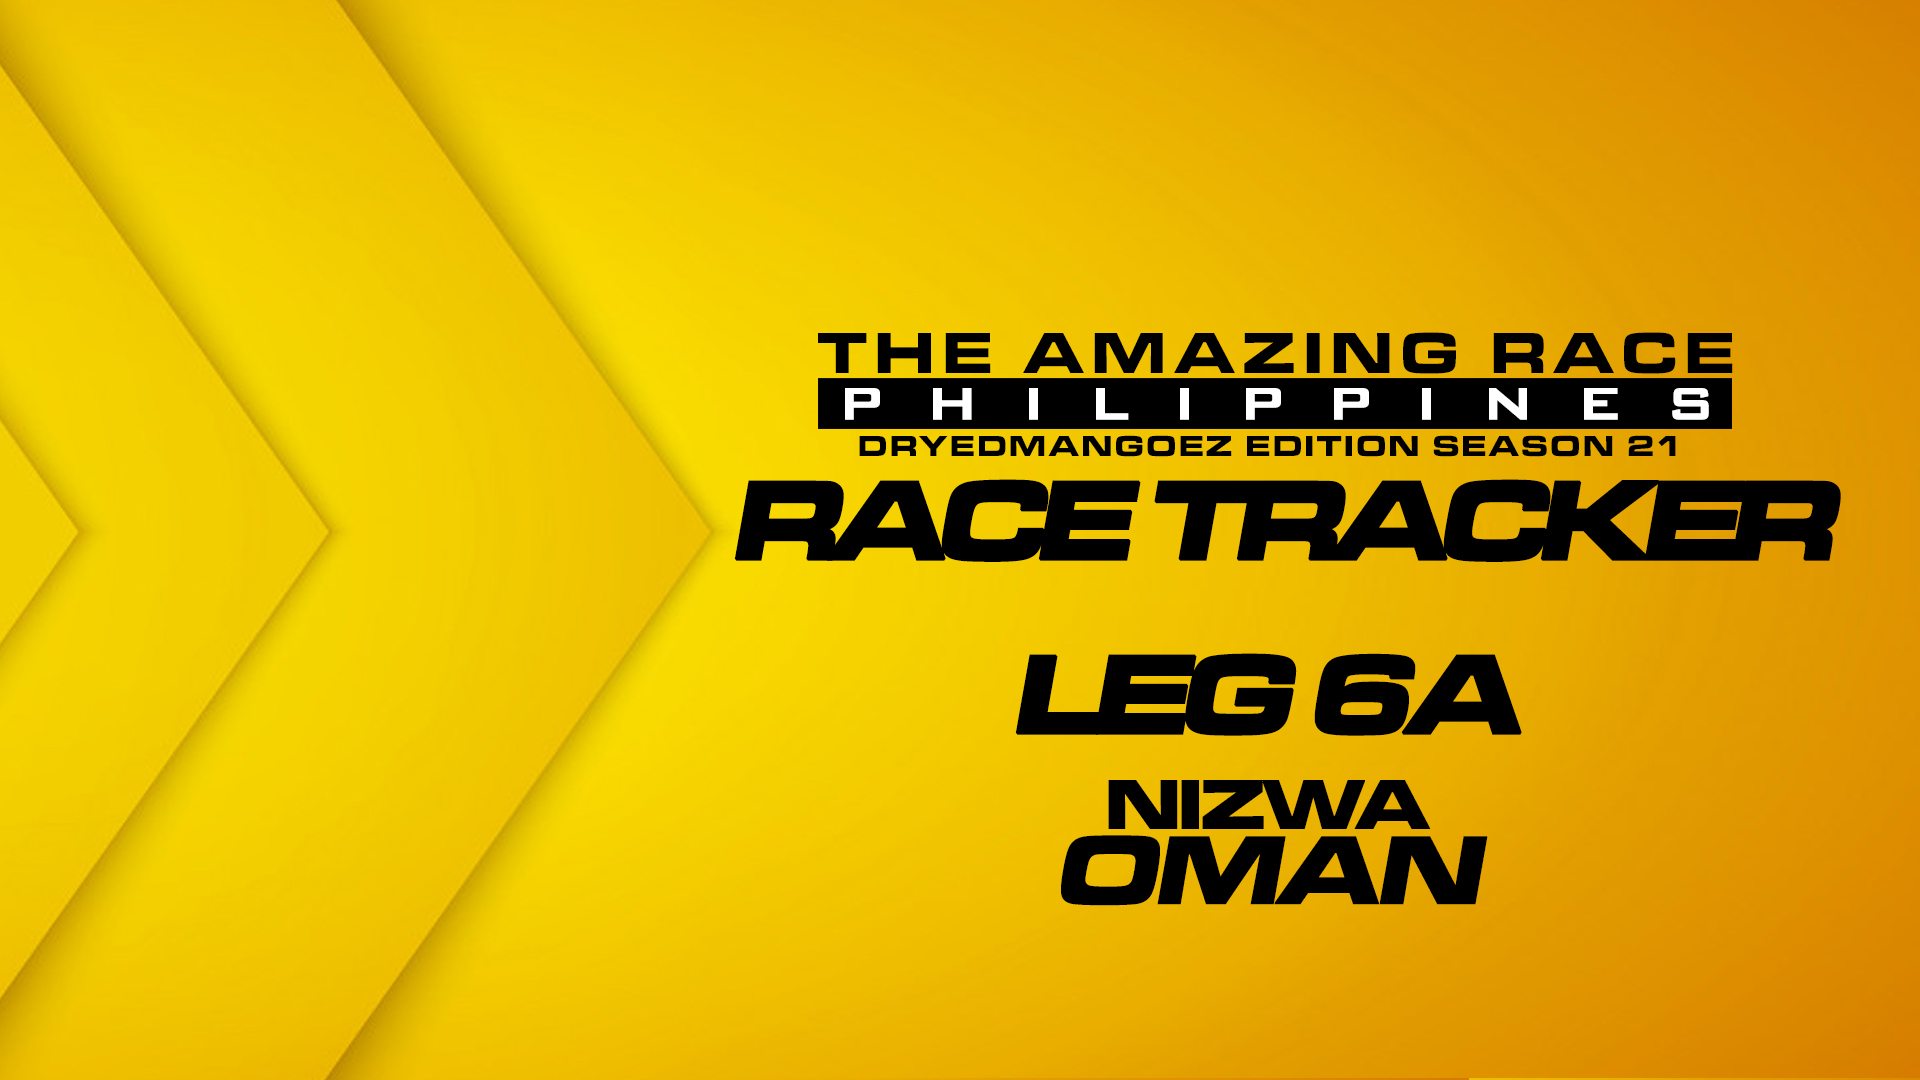 The Amazing Race Philippines: DryedMangoez Edition Season 21 Race Tracker – Leg 6A